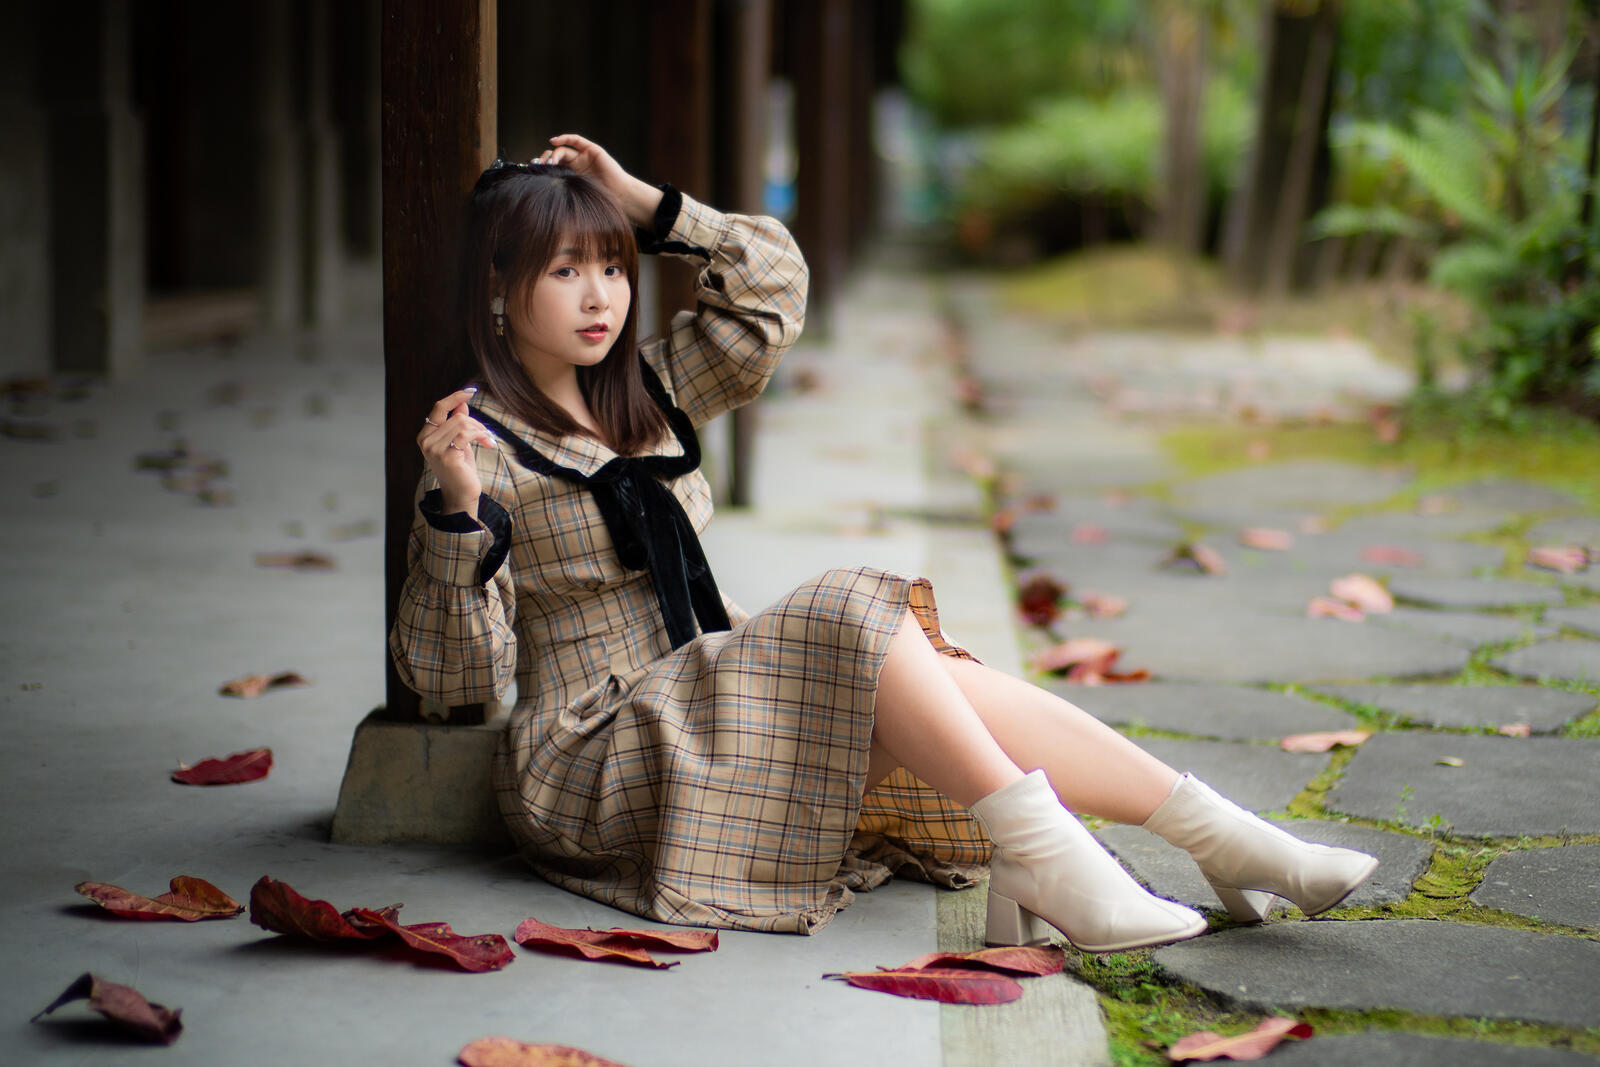 Free photo Asian girl sitting on concrete next to fallen leaves